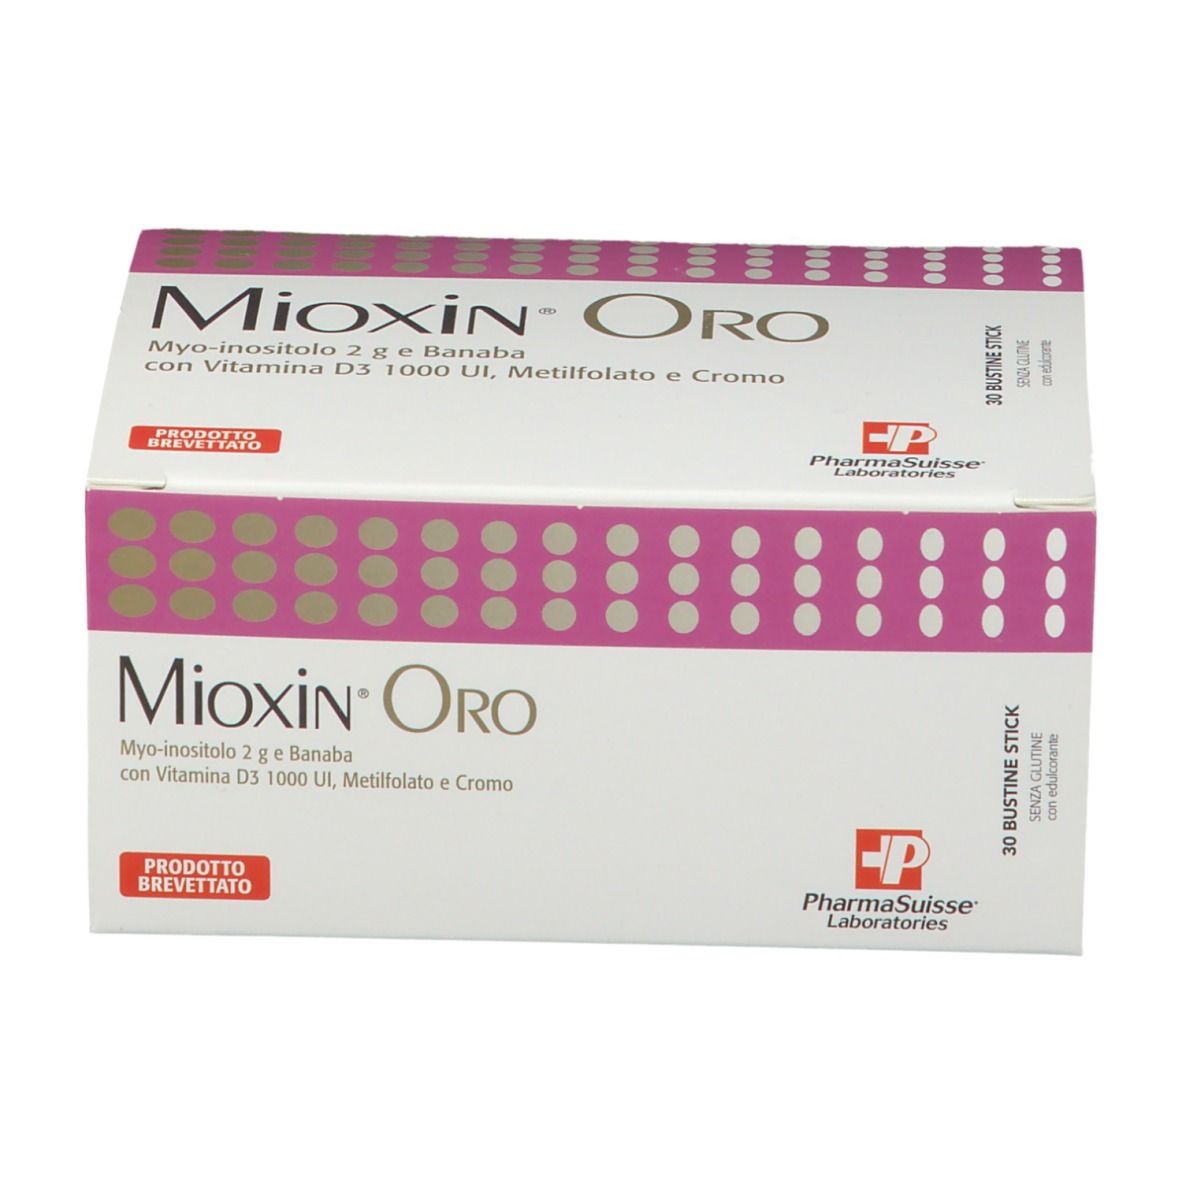 PharmaSuisse Mioxin® Oro